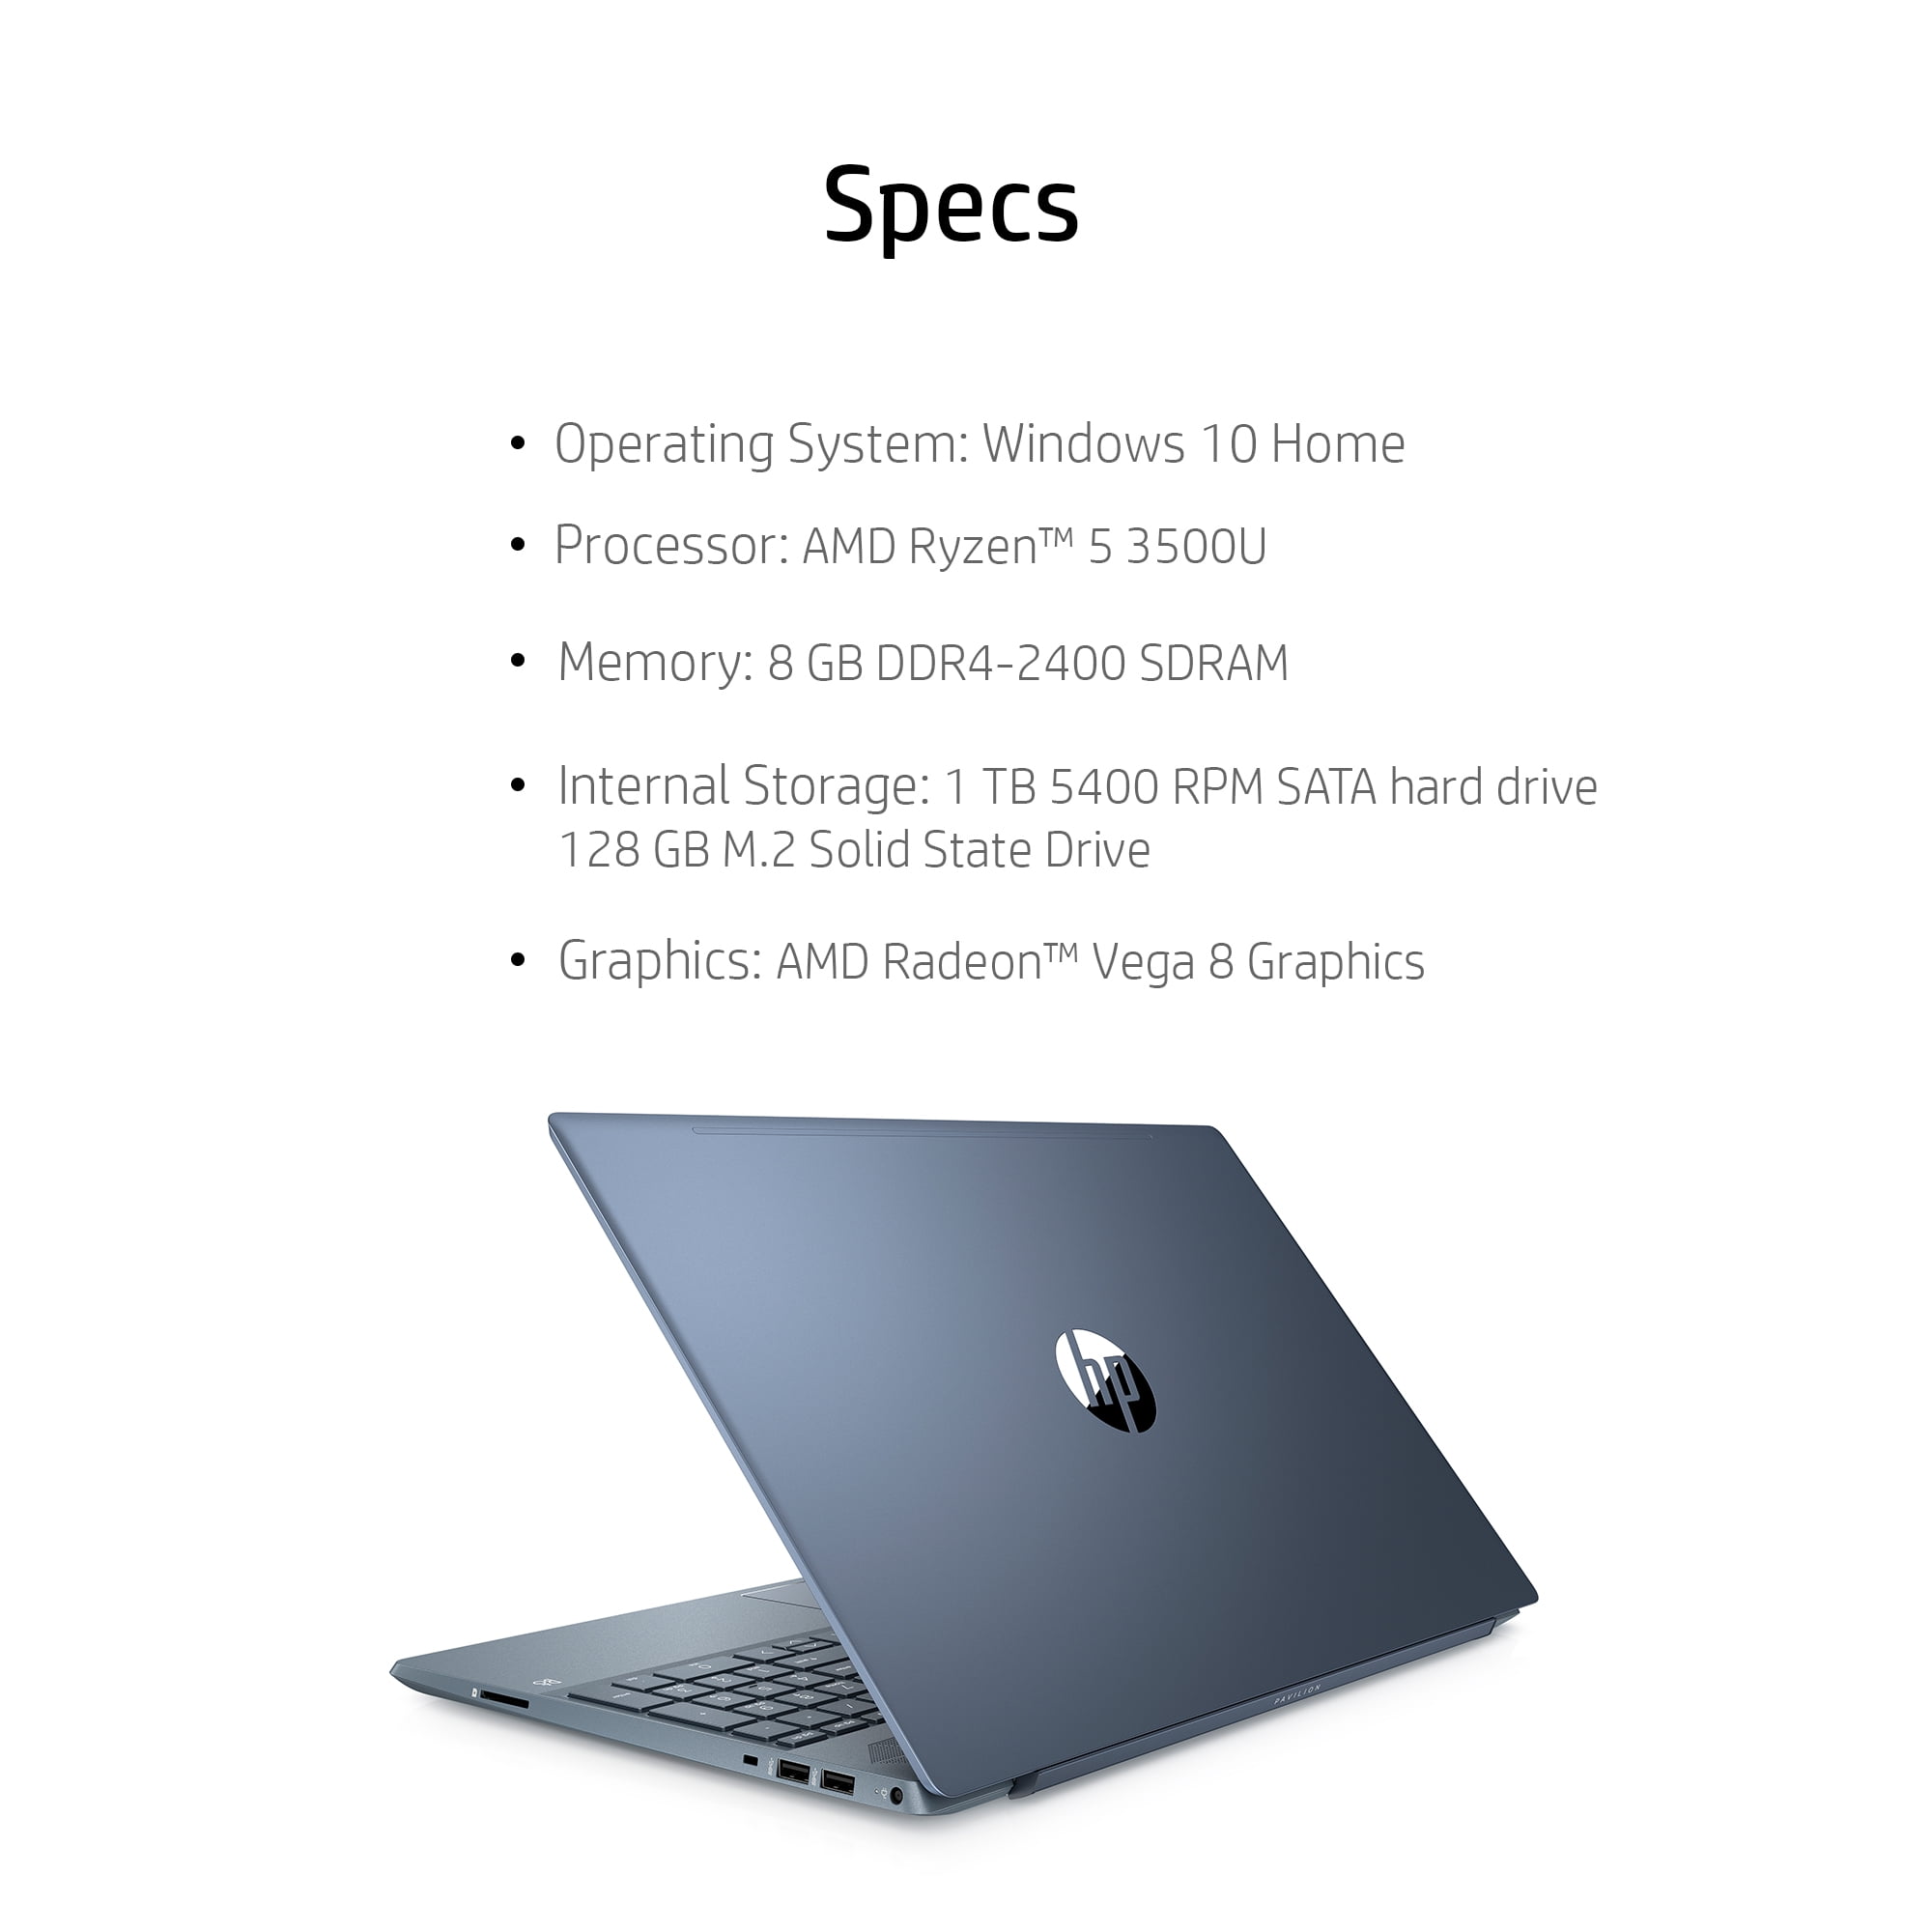 Kader pijn doen Versterker HP Pavilion Laptop 15.6" FHD, AMD Ryzen 5 3500U, AMD Radeon Vega 8, 8GB  SDRAM, 1TB HDD+128GB SSD, 15-cw1063wm, Horizon Blue (Google Classroom  Compatible) - Walmart.com